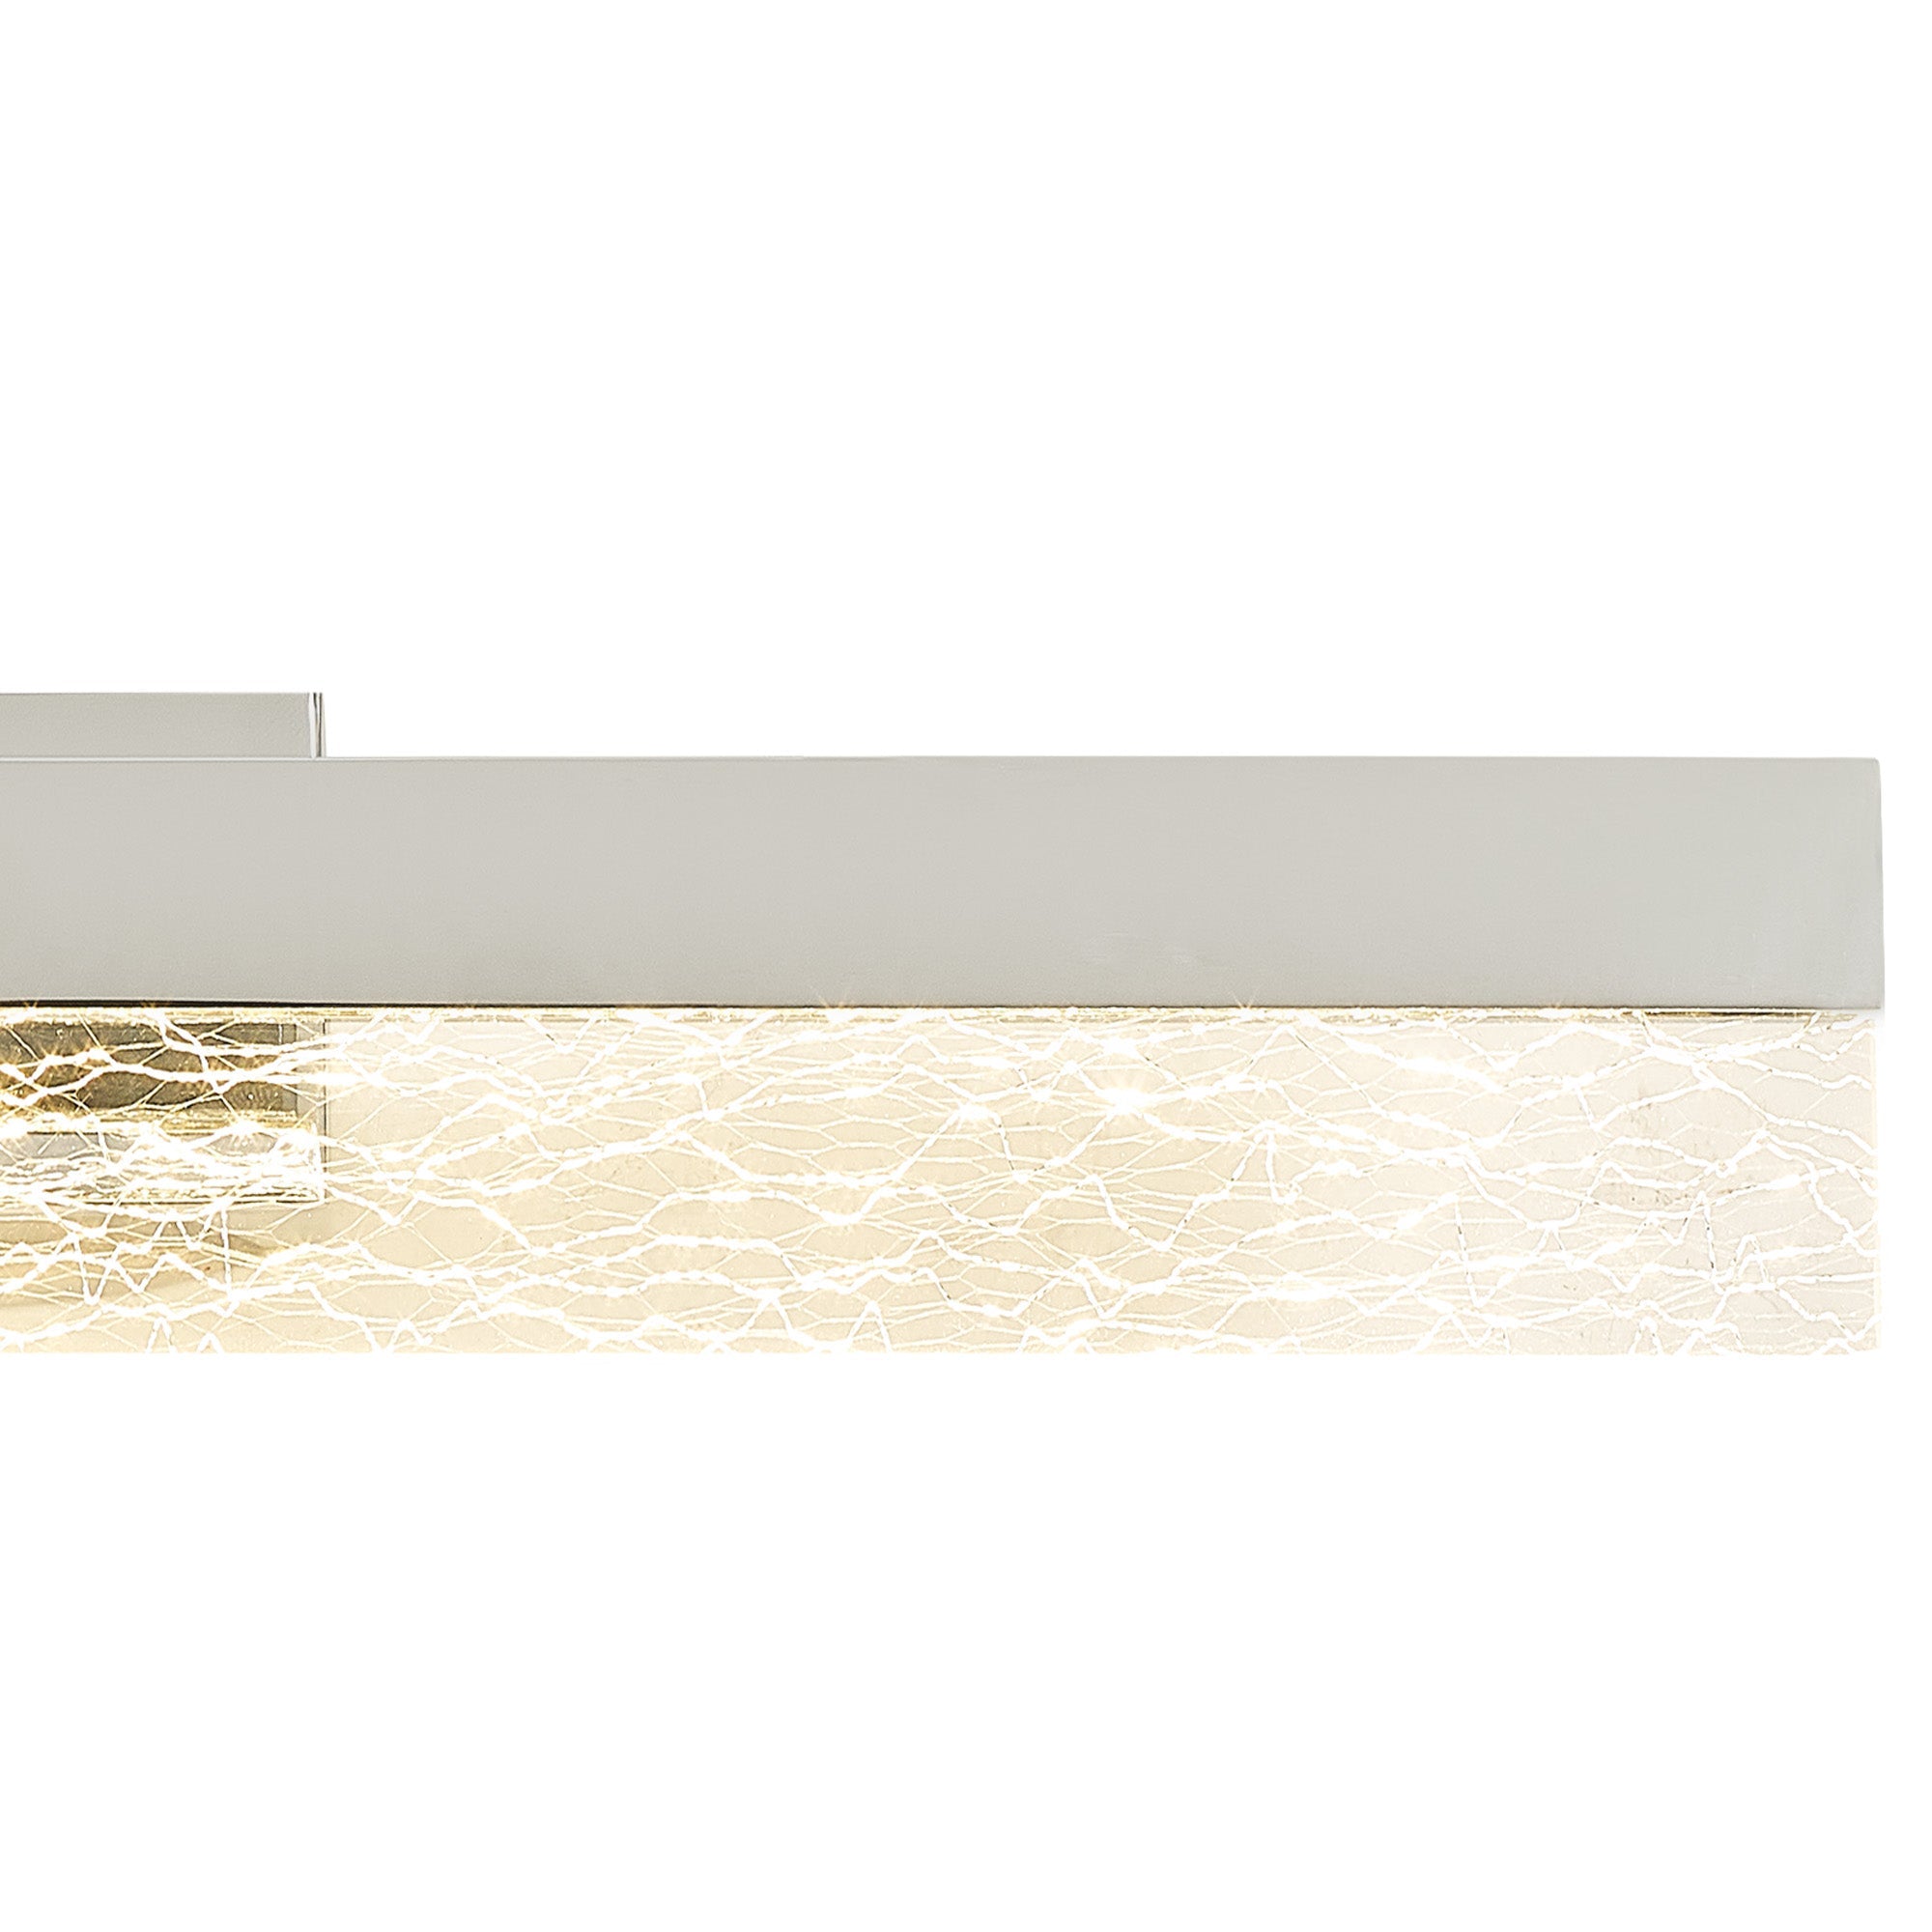 Leon Bathroom Mirror Light, 8/12W LED, 3000K, 6001000lm, IP44, Sand Black Polished Chrome, 3yrs Warranty